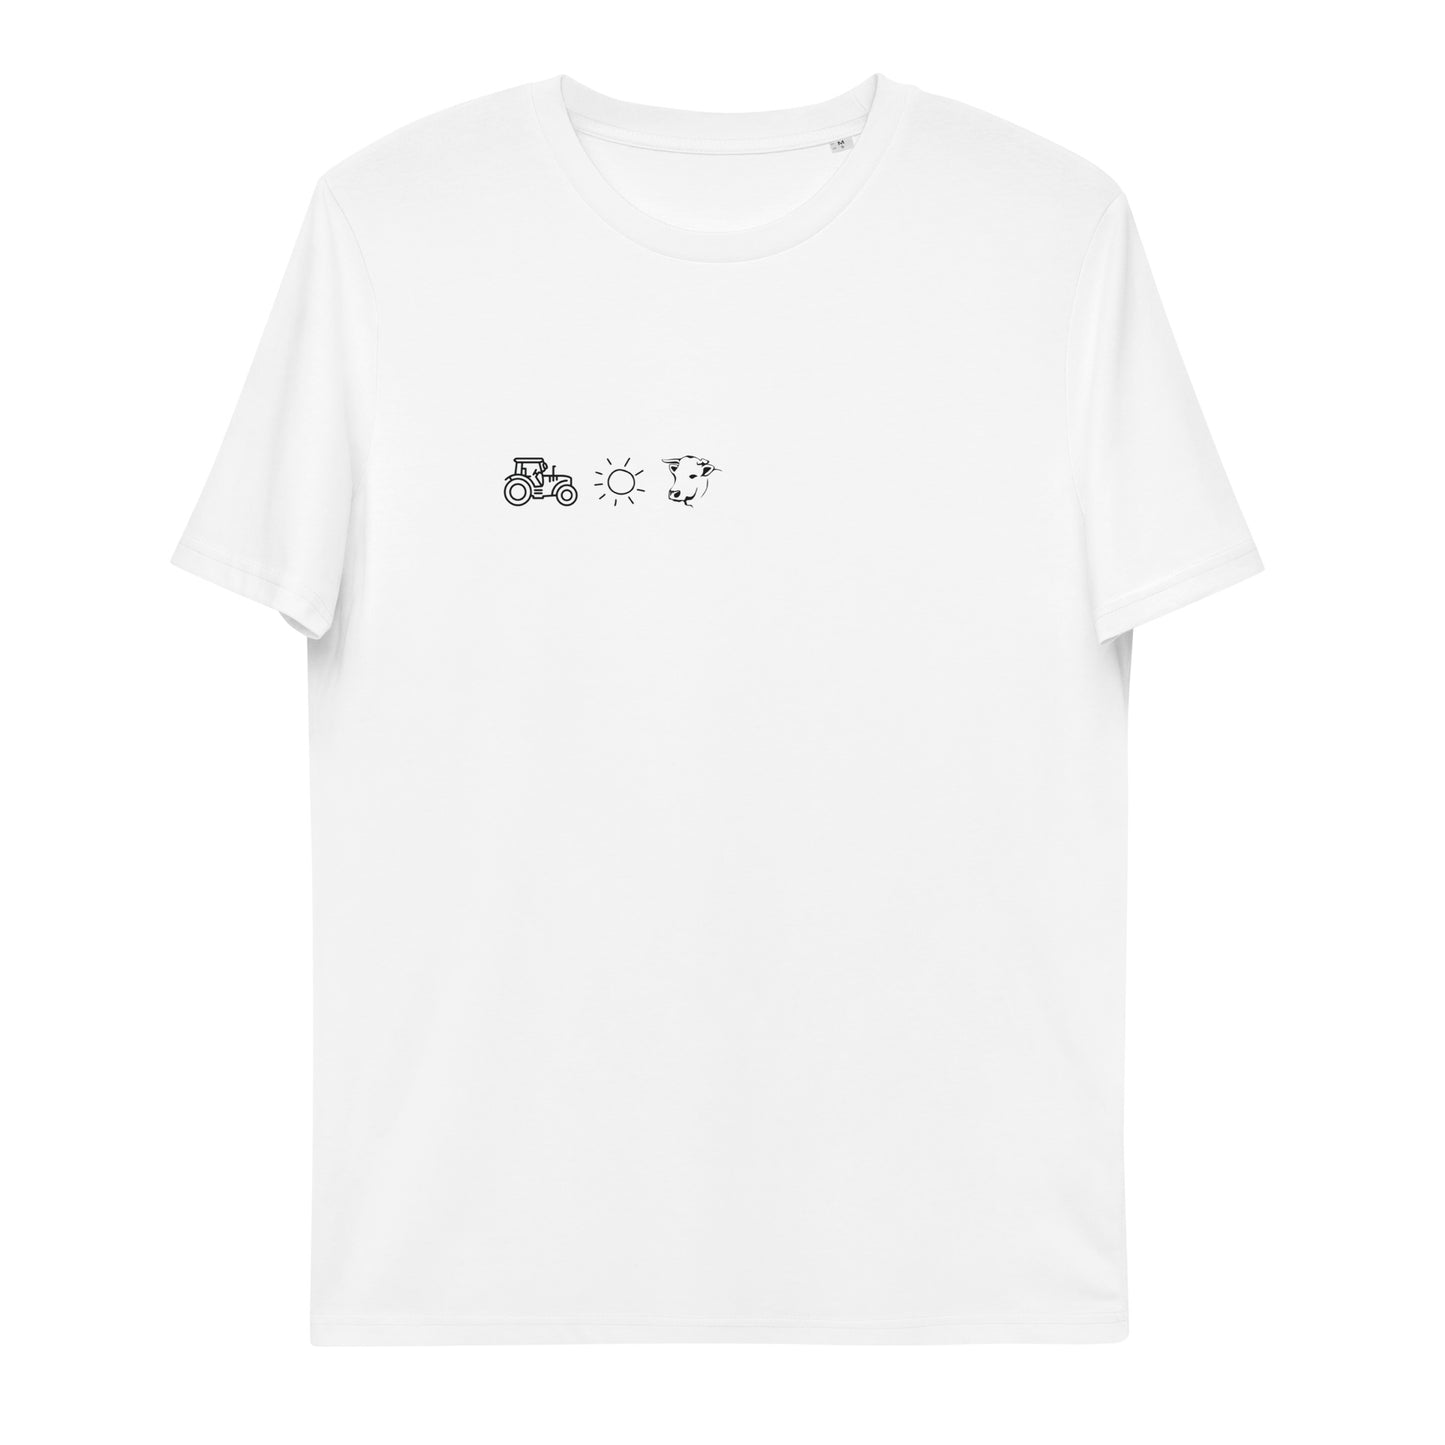 Elemente - Unisex T-Shirt